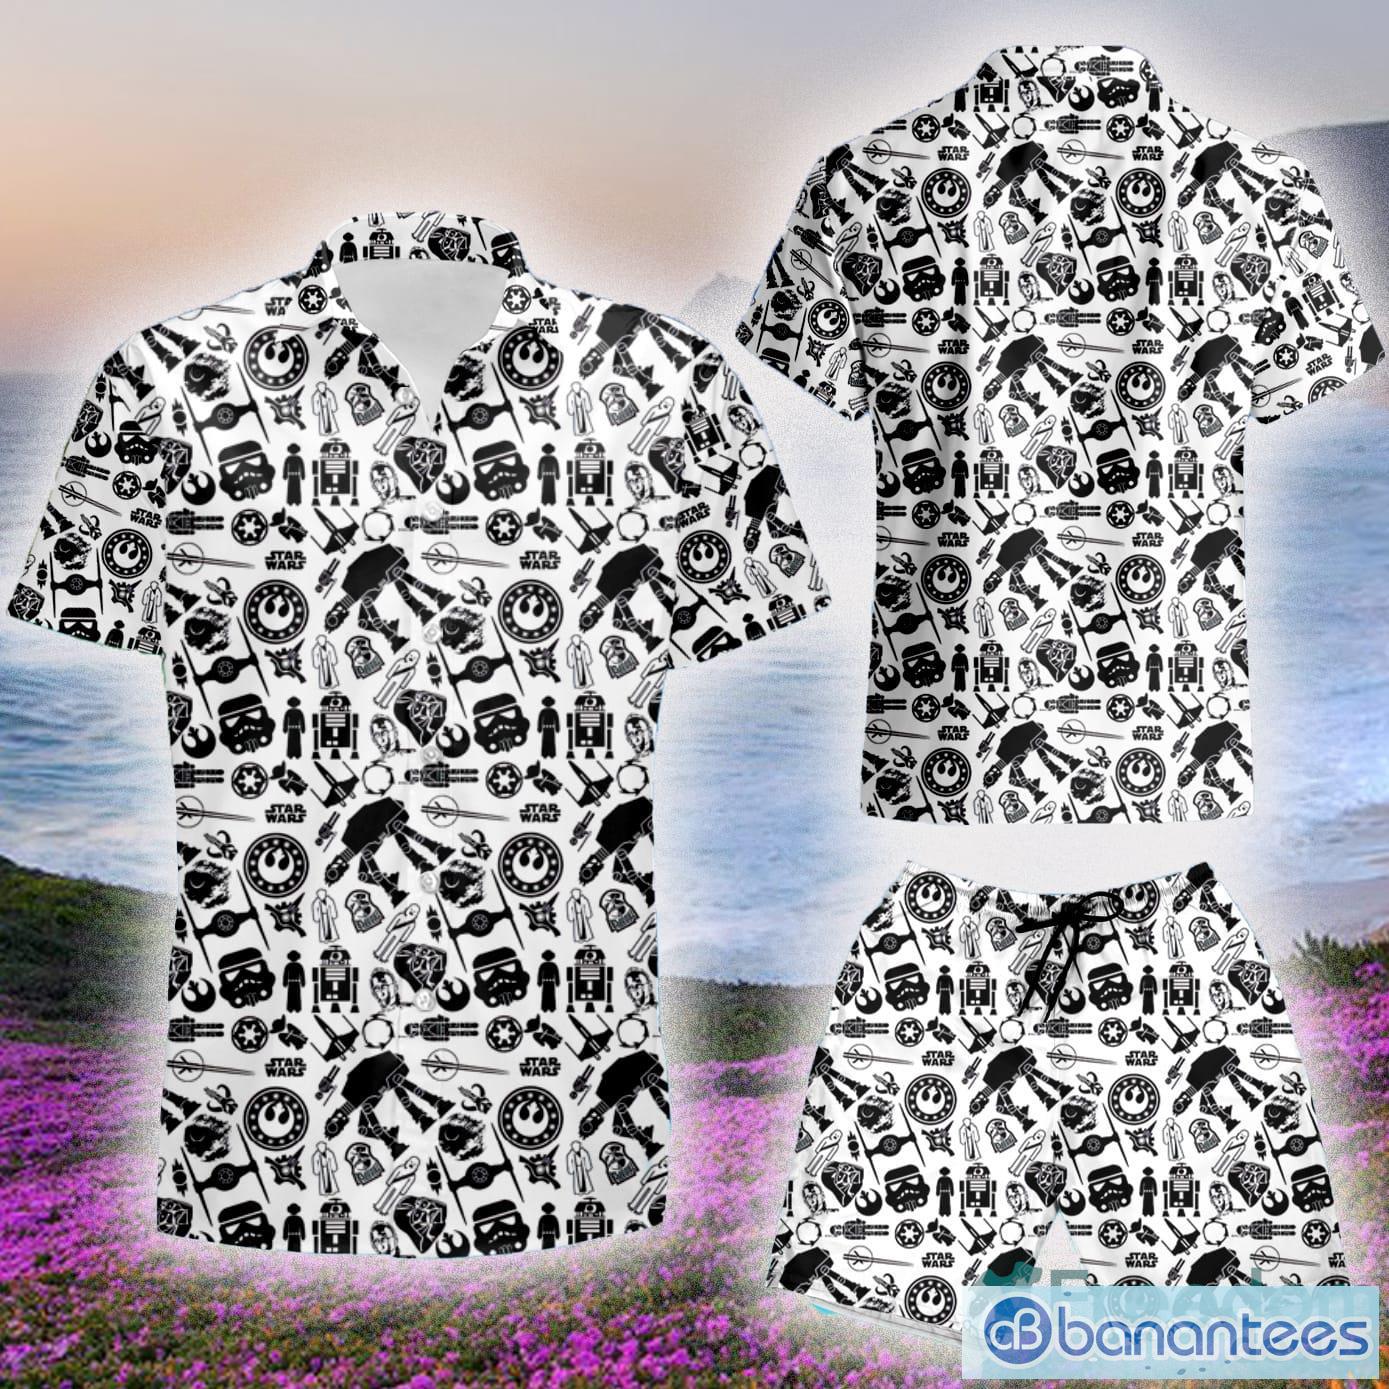 Star Wars 3D Hawaiian Shirts Gift For Men And Women - Banantees